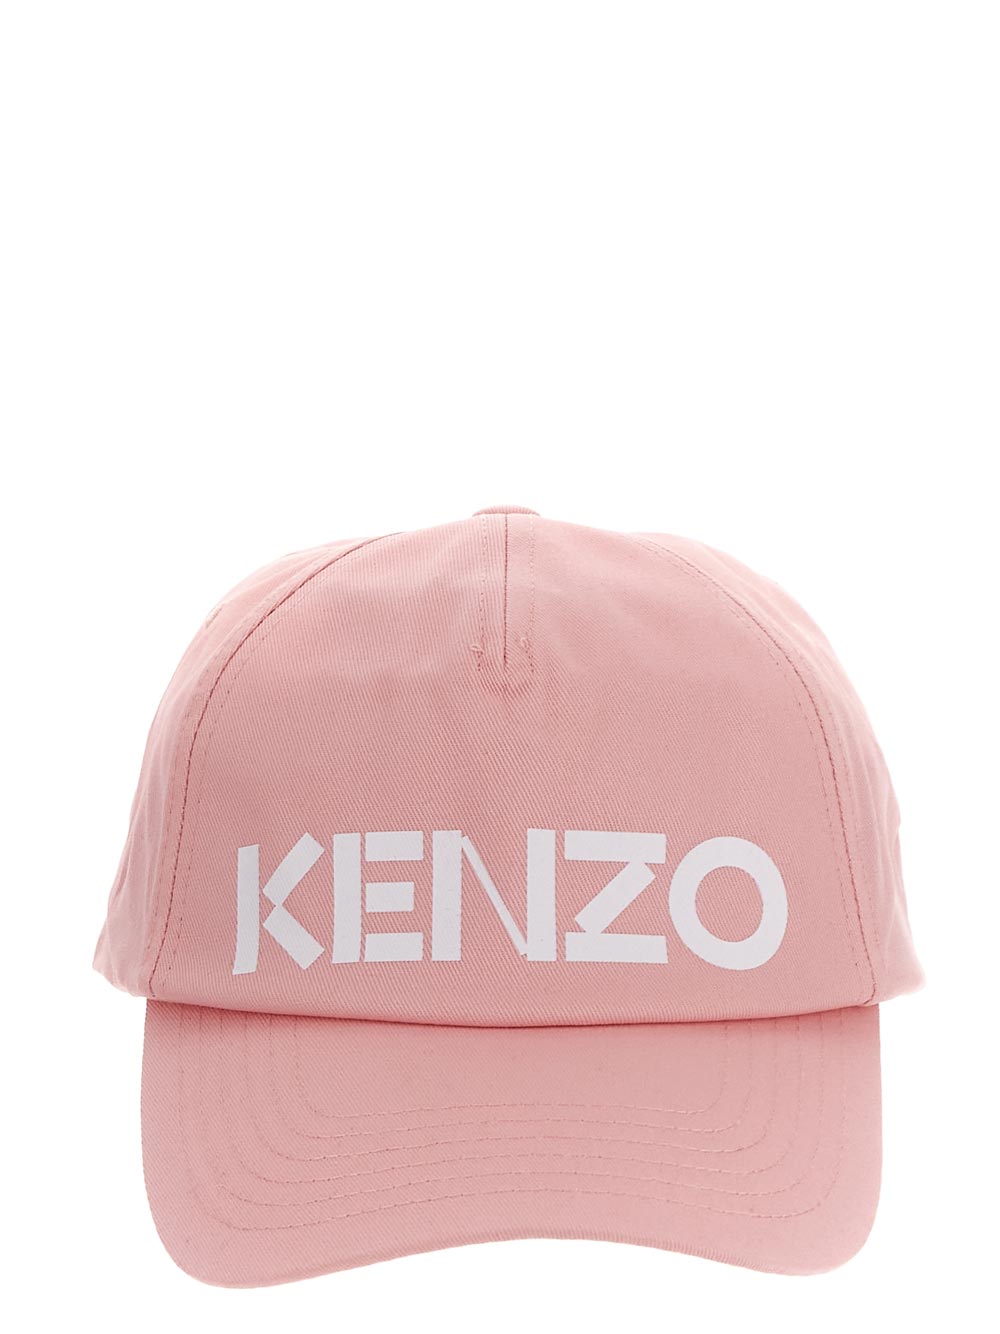 Kenzo Graphy Cotton Baseball Cap